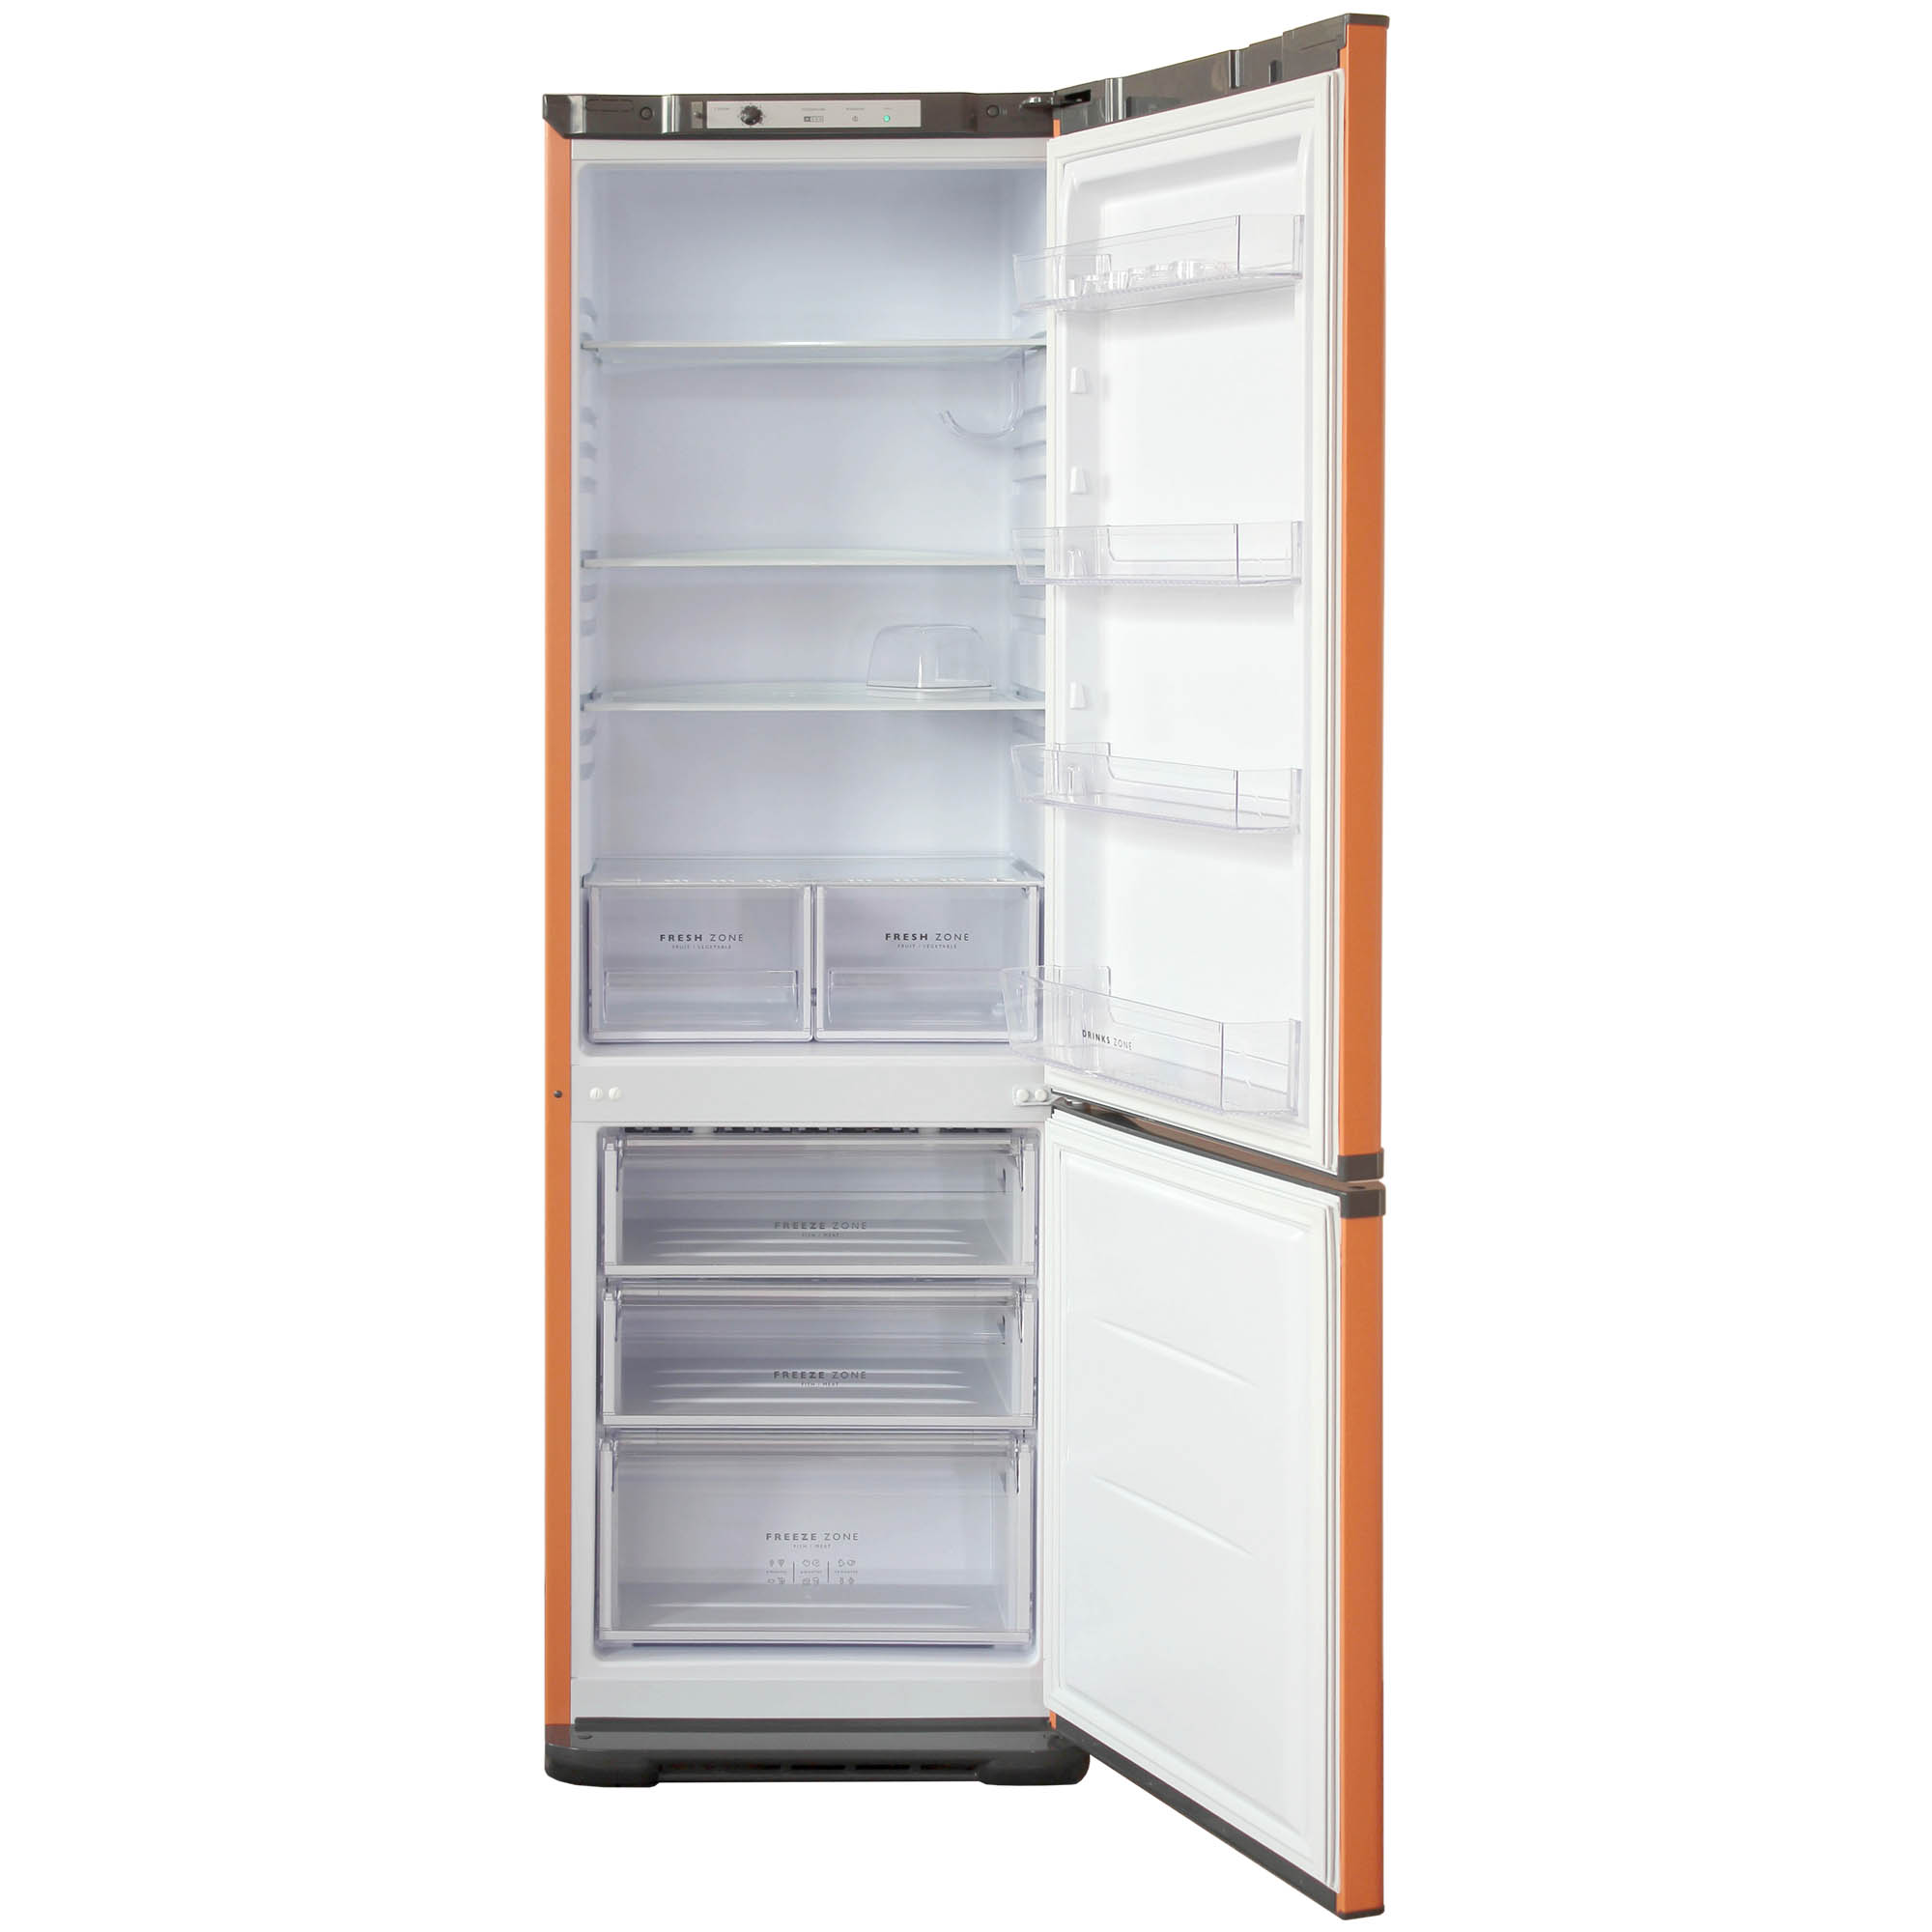 Хол бирюса. Холодильник Бирюса t340nf оранжевый. Бирюса t631 холодильник оранжевый. Холодильник 207 см Бирюса t380nf. Холодильник Бирюса 627.